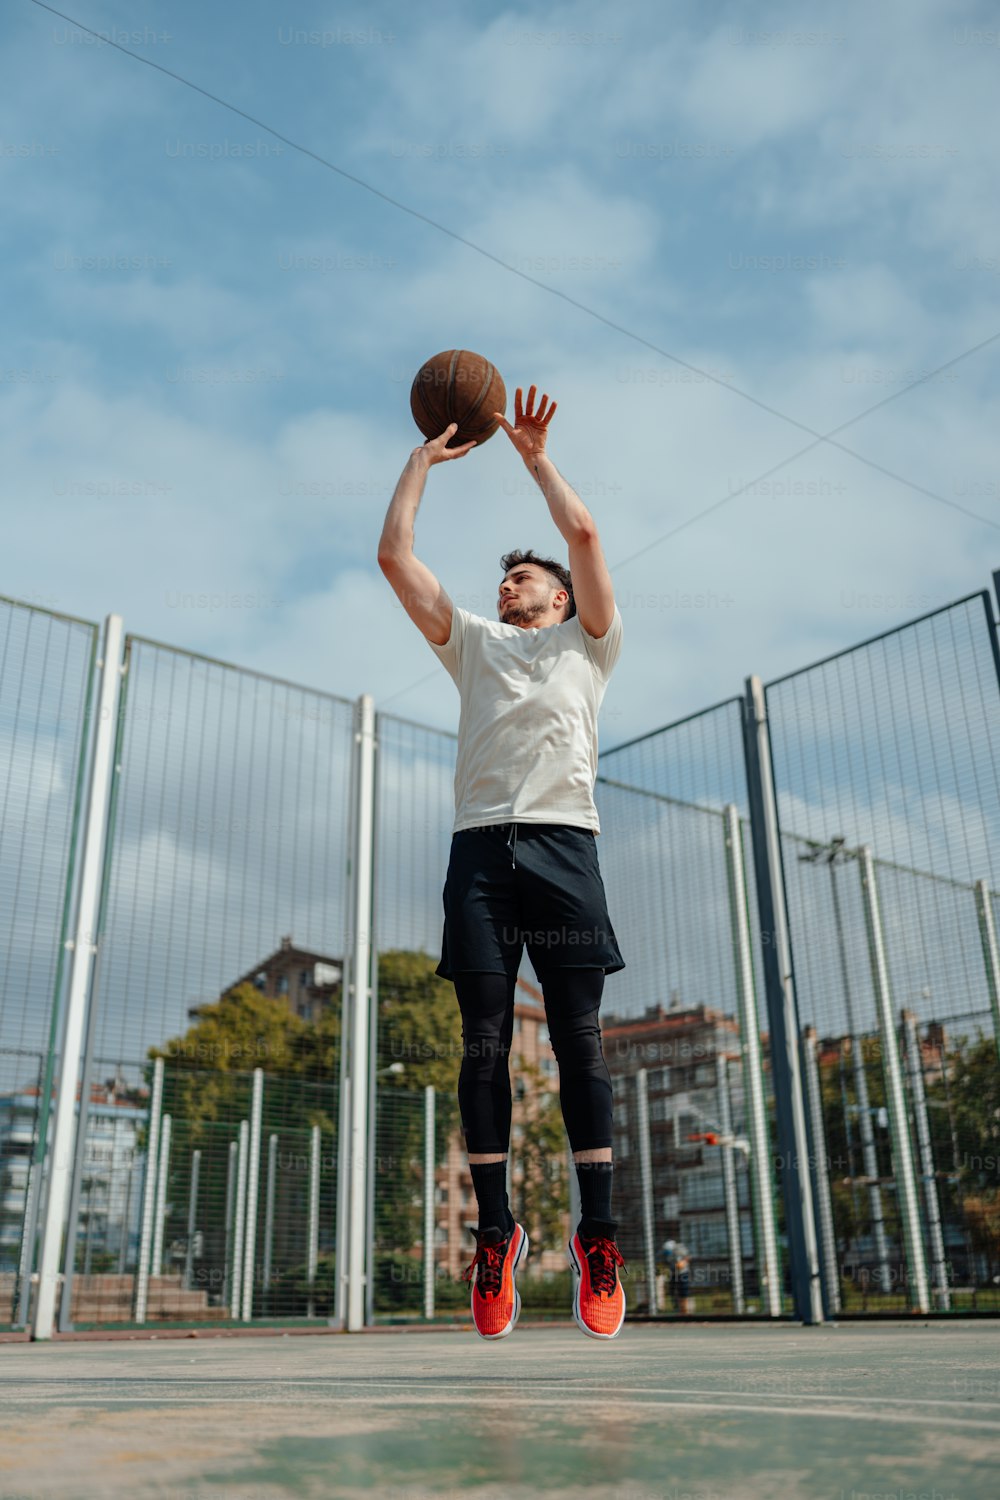 Un hombre saltando para clavar una pelota de baloncesto